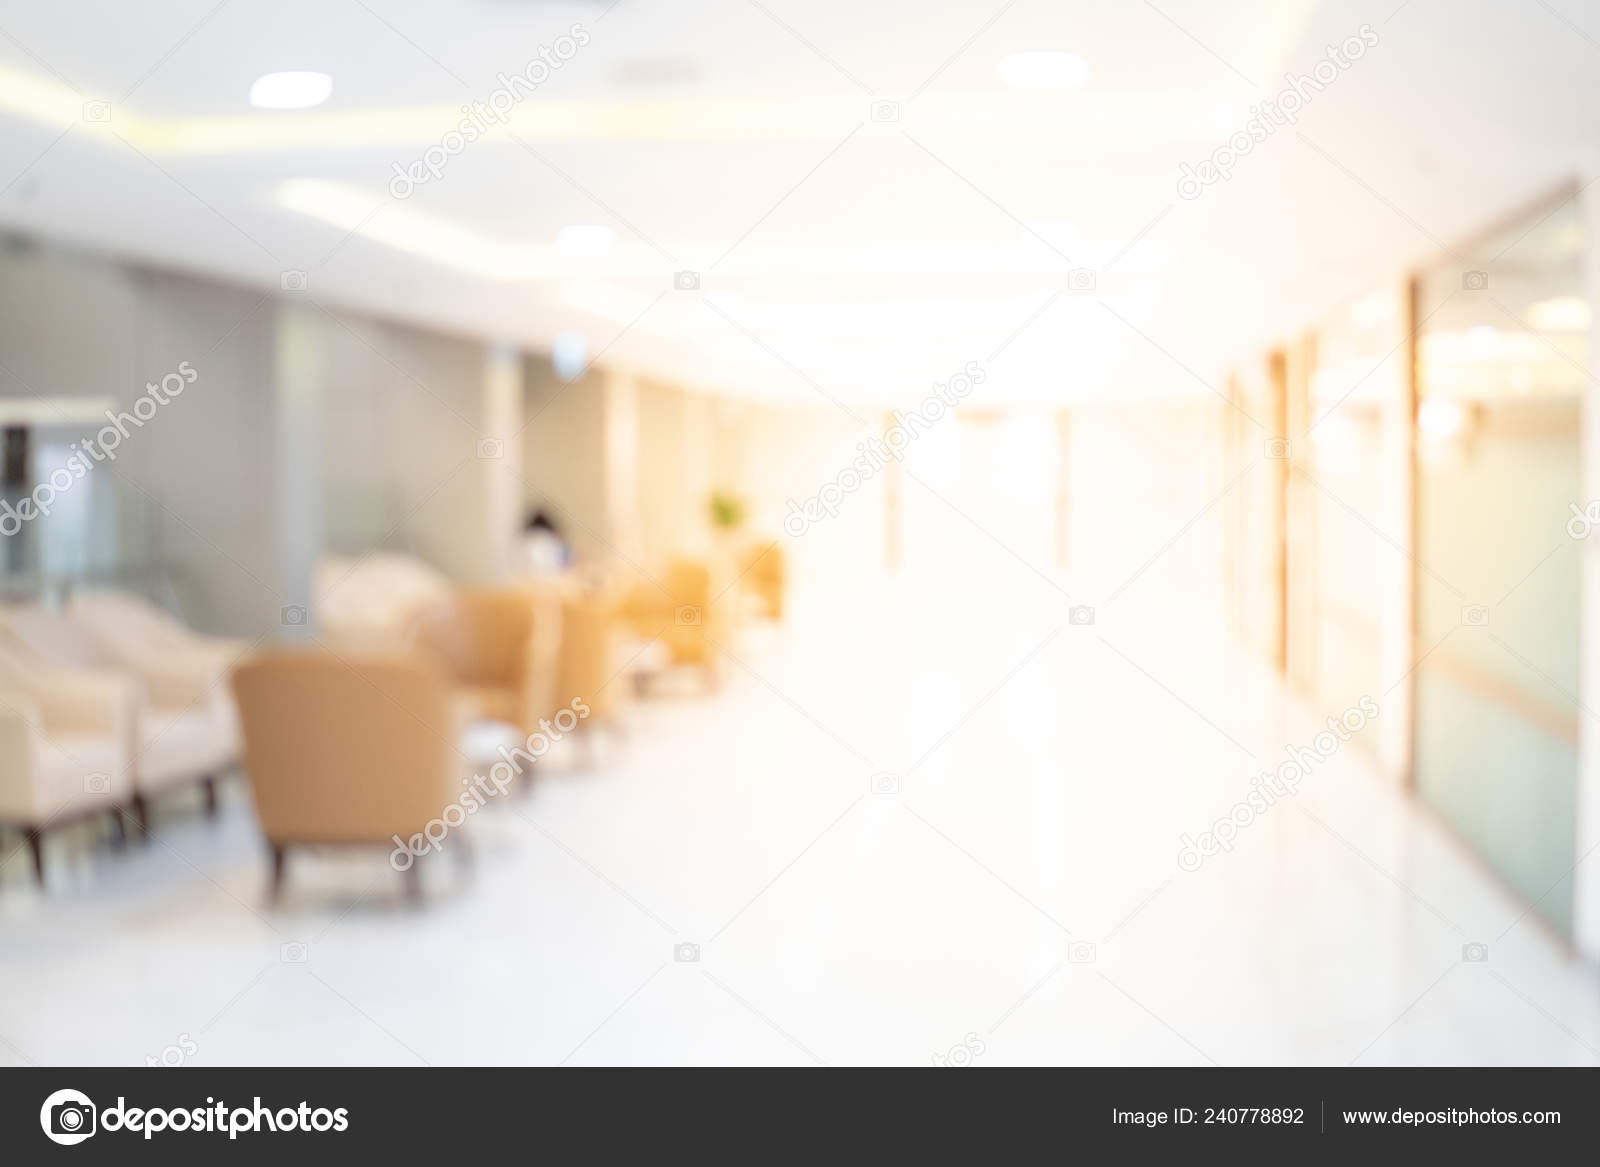 Abstract Blur Luxury Hospital Corridor Blur Clinic Interior